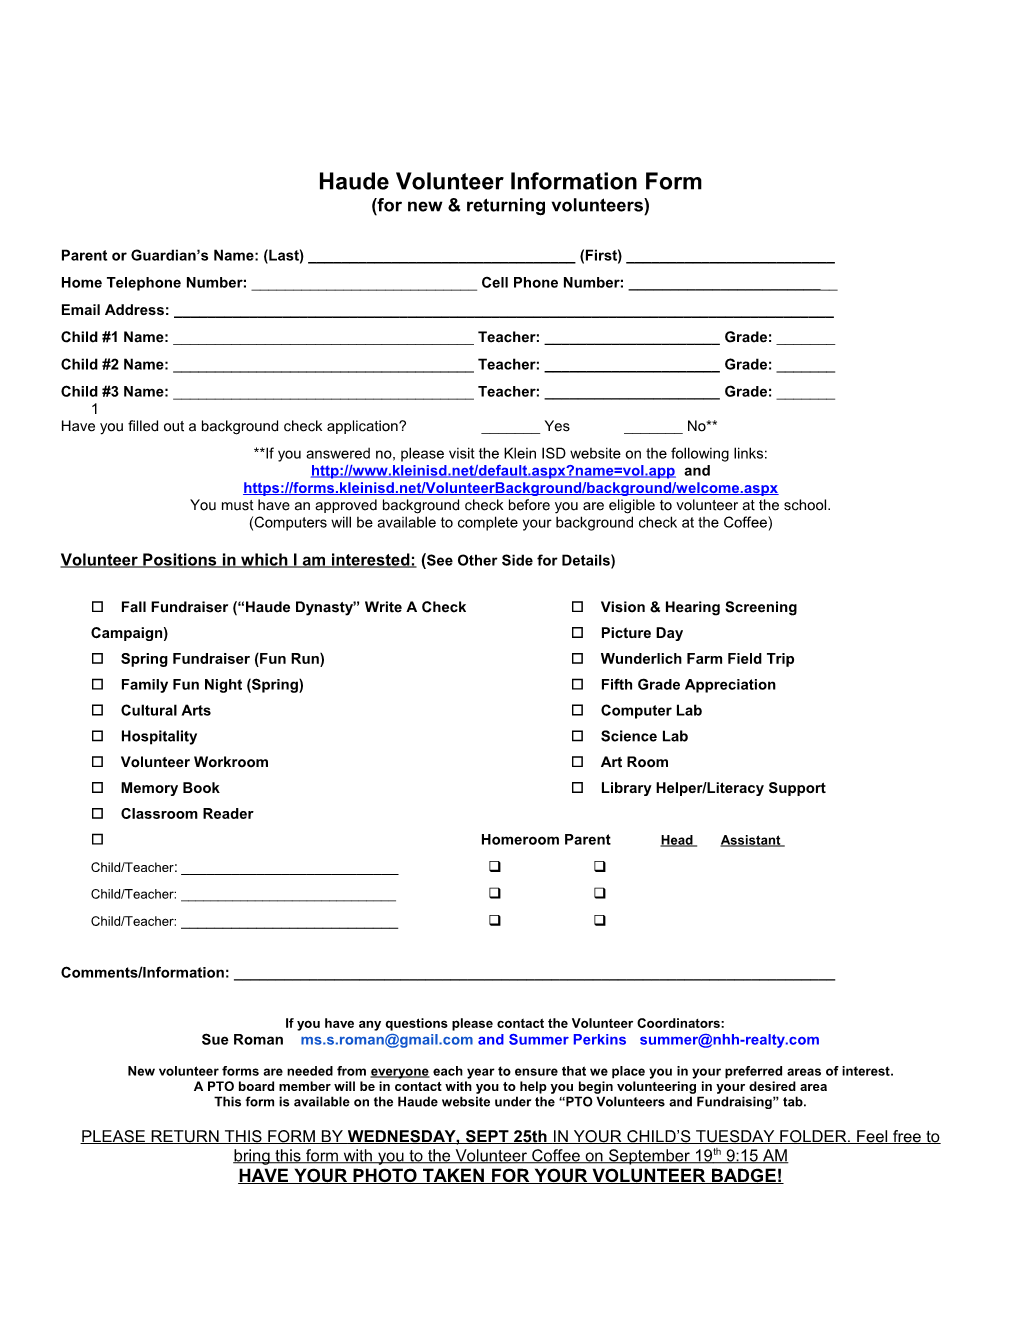 Haude Volunteer Information Form